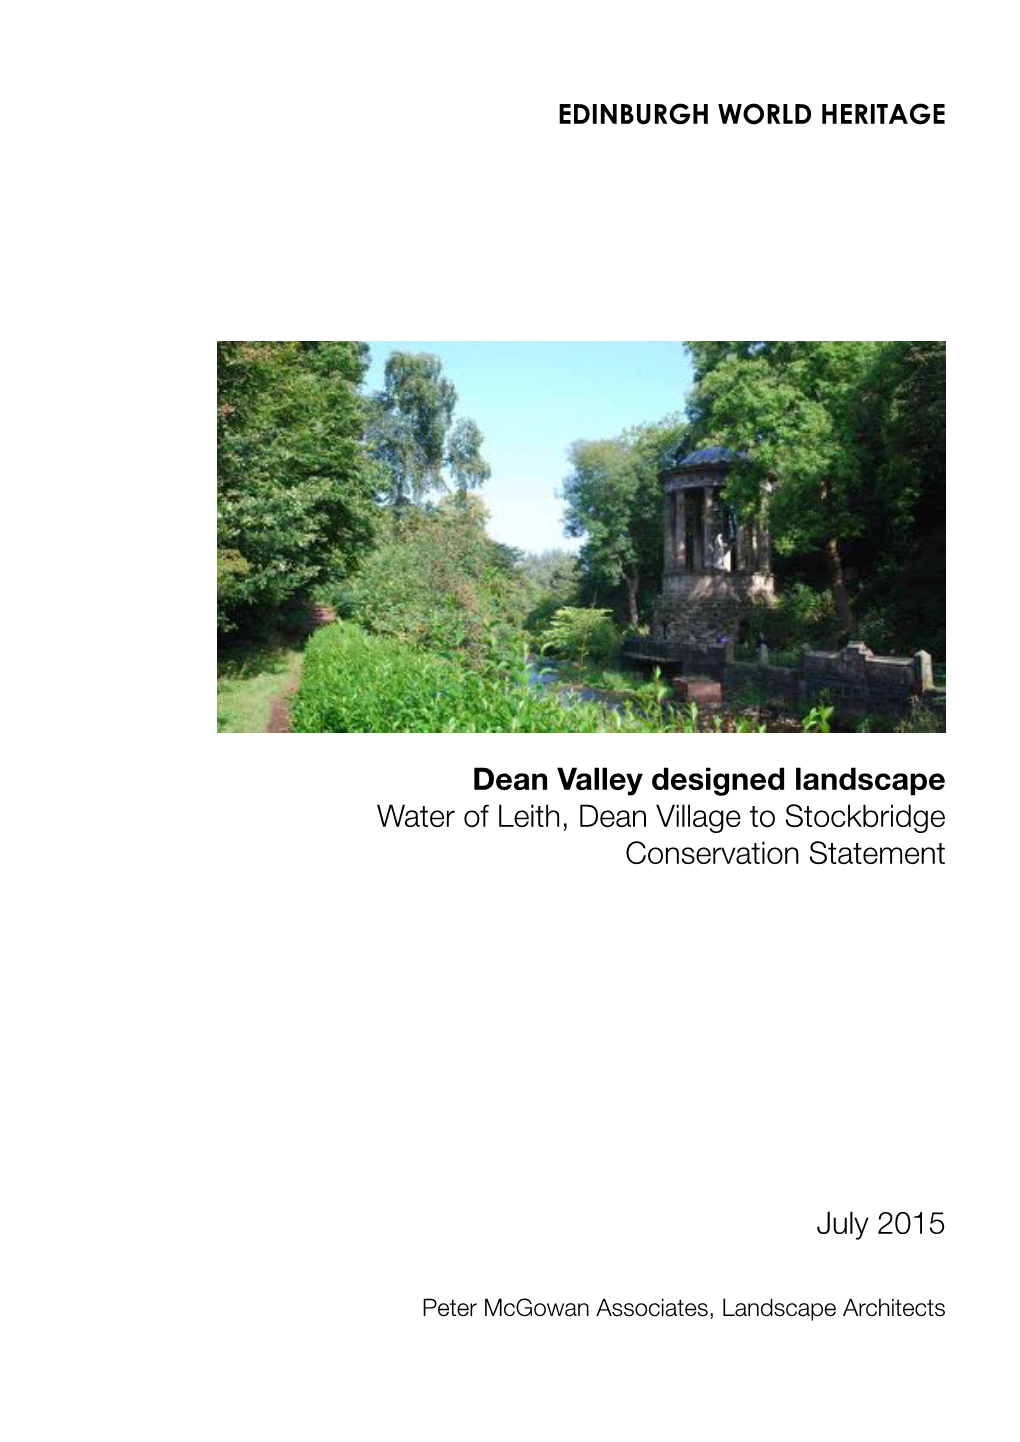 Dean Valley Designed Landscape Water of Leith, Dean Village to Stockbridge Conservation Statement July 2015